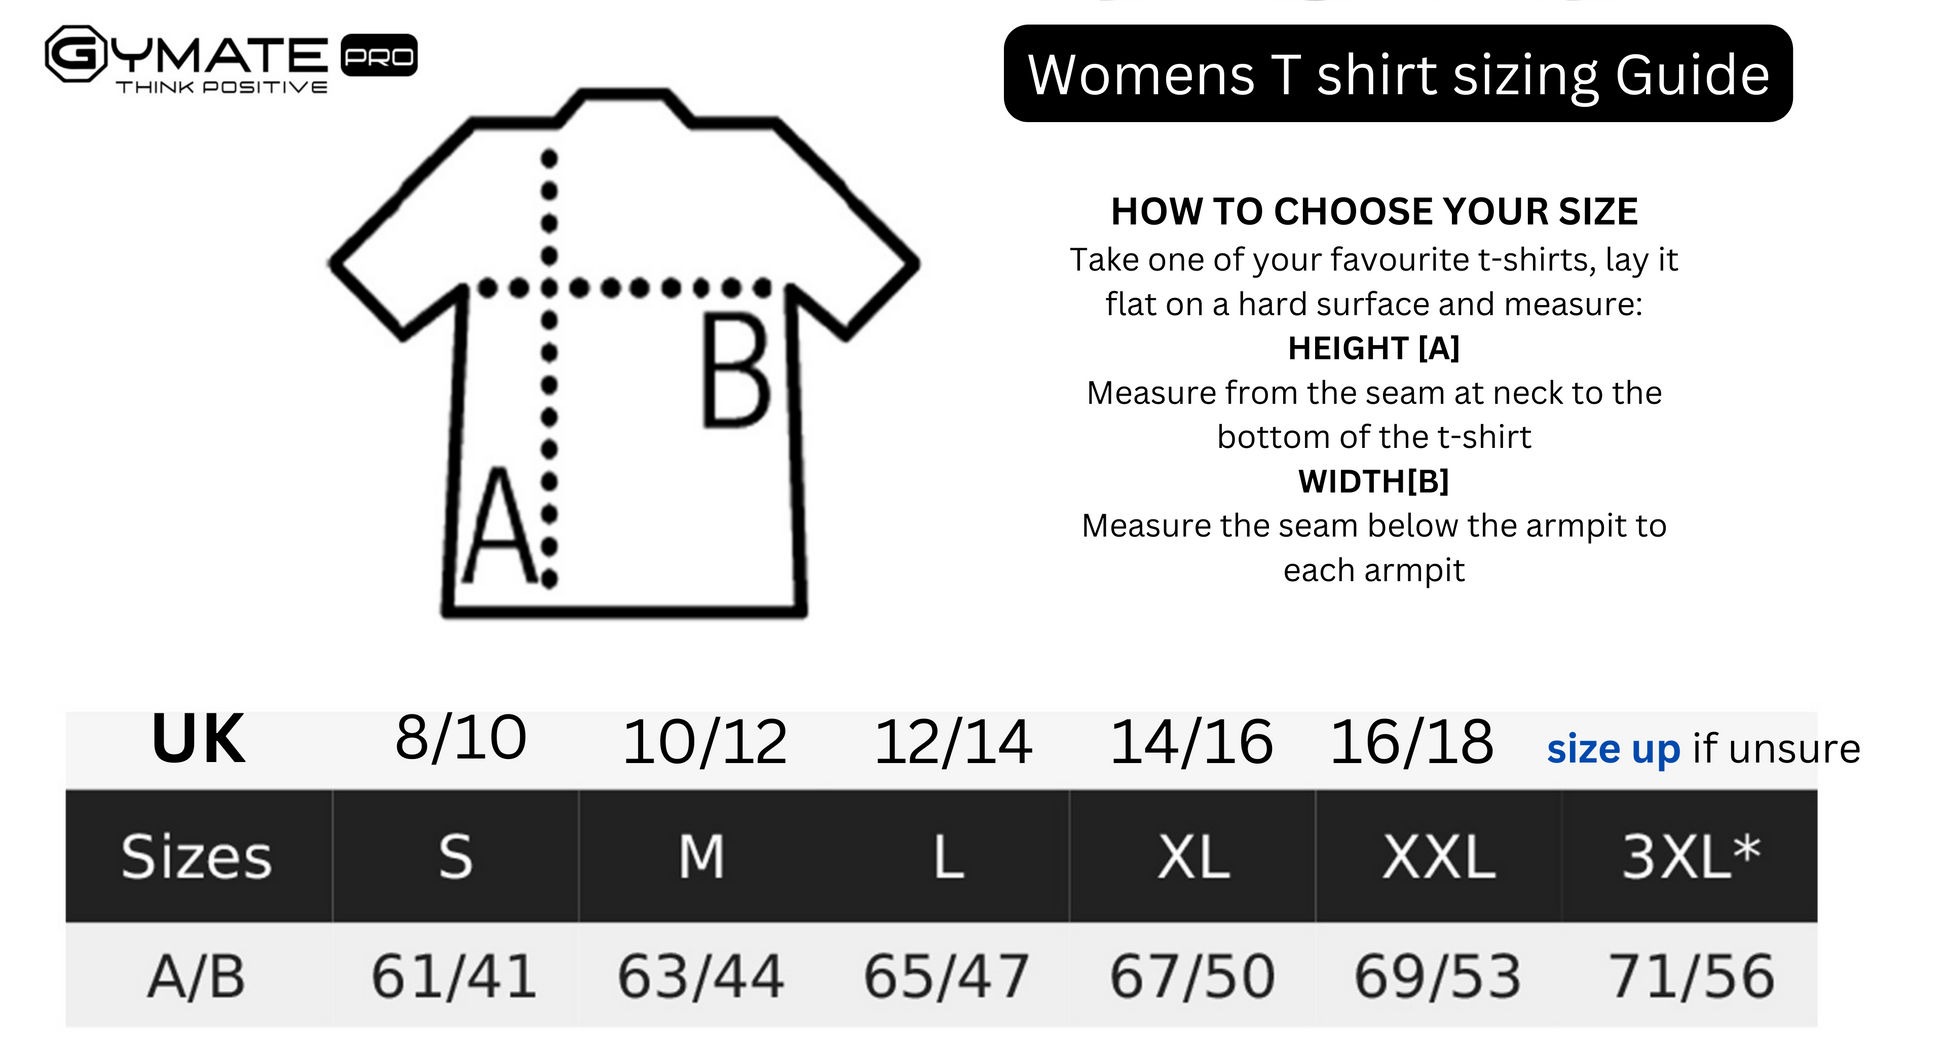 Designer T shirts for women Original Gymate Think Positive size chart